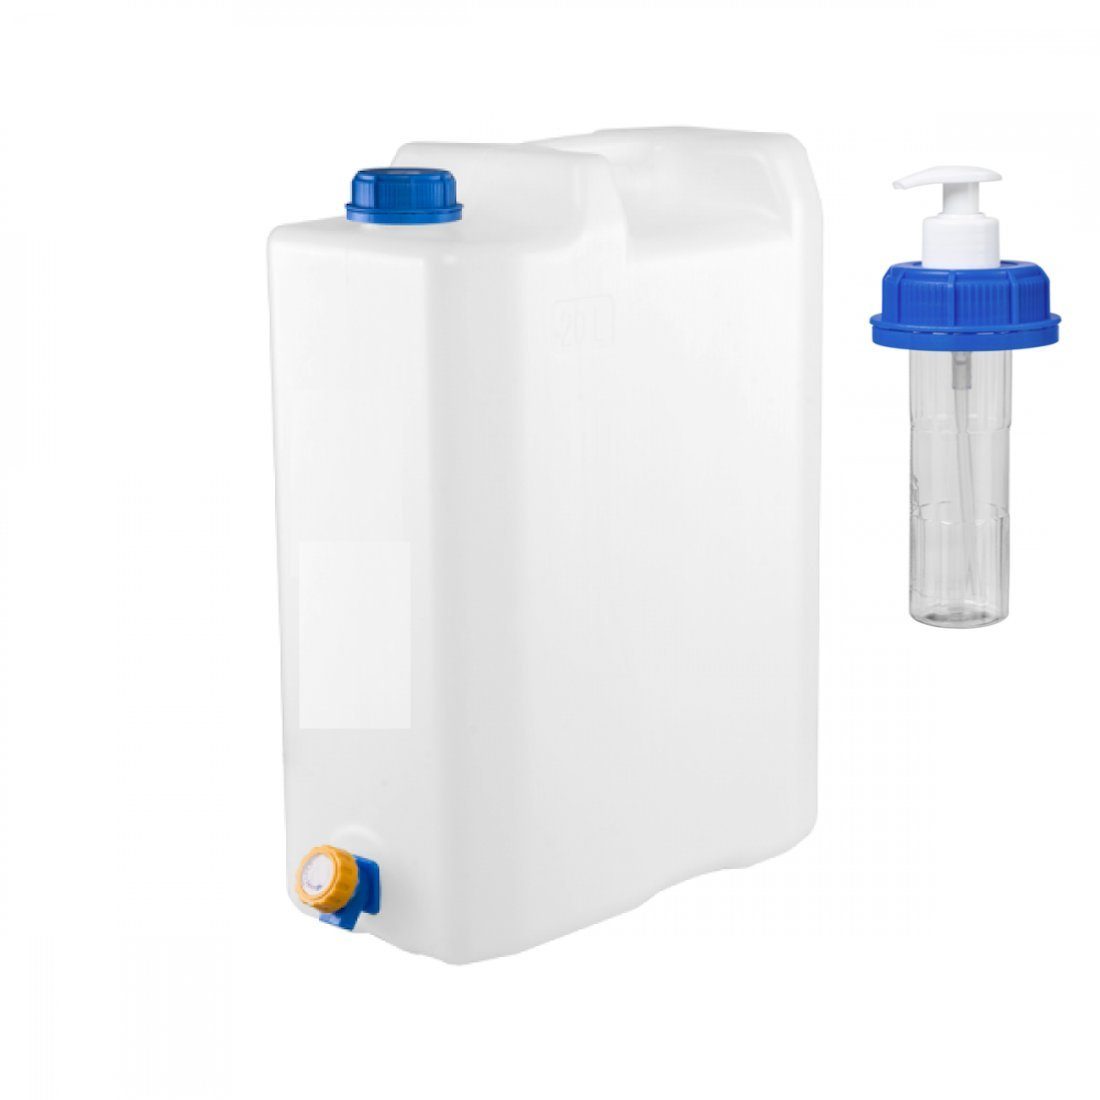 TRIZERATOP Kanister Wasserkanister 20 Liter mit Wasserhahn und Seifenspender (Wasserkanister 20 Liter mit Wasserhahn) | Kanister